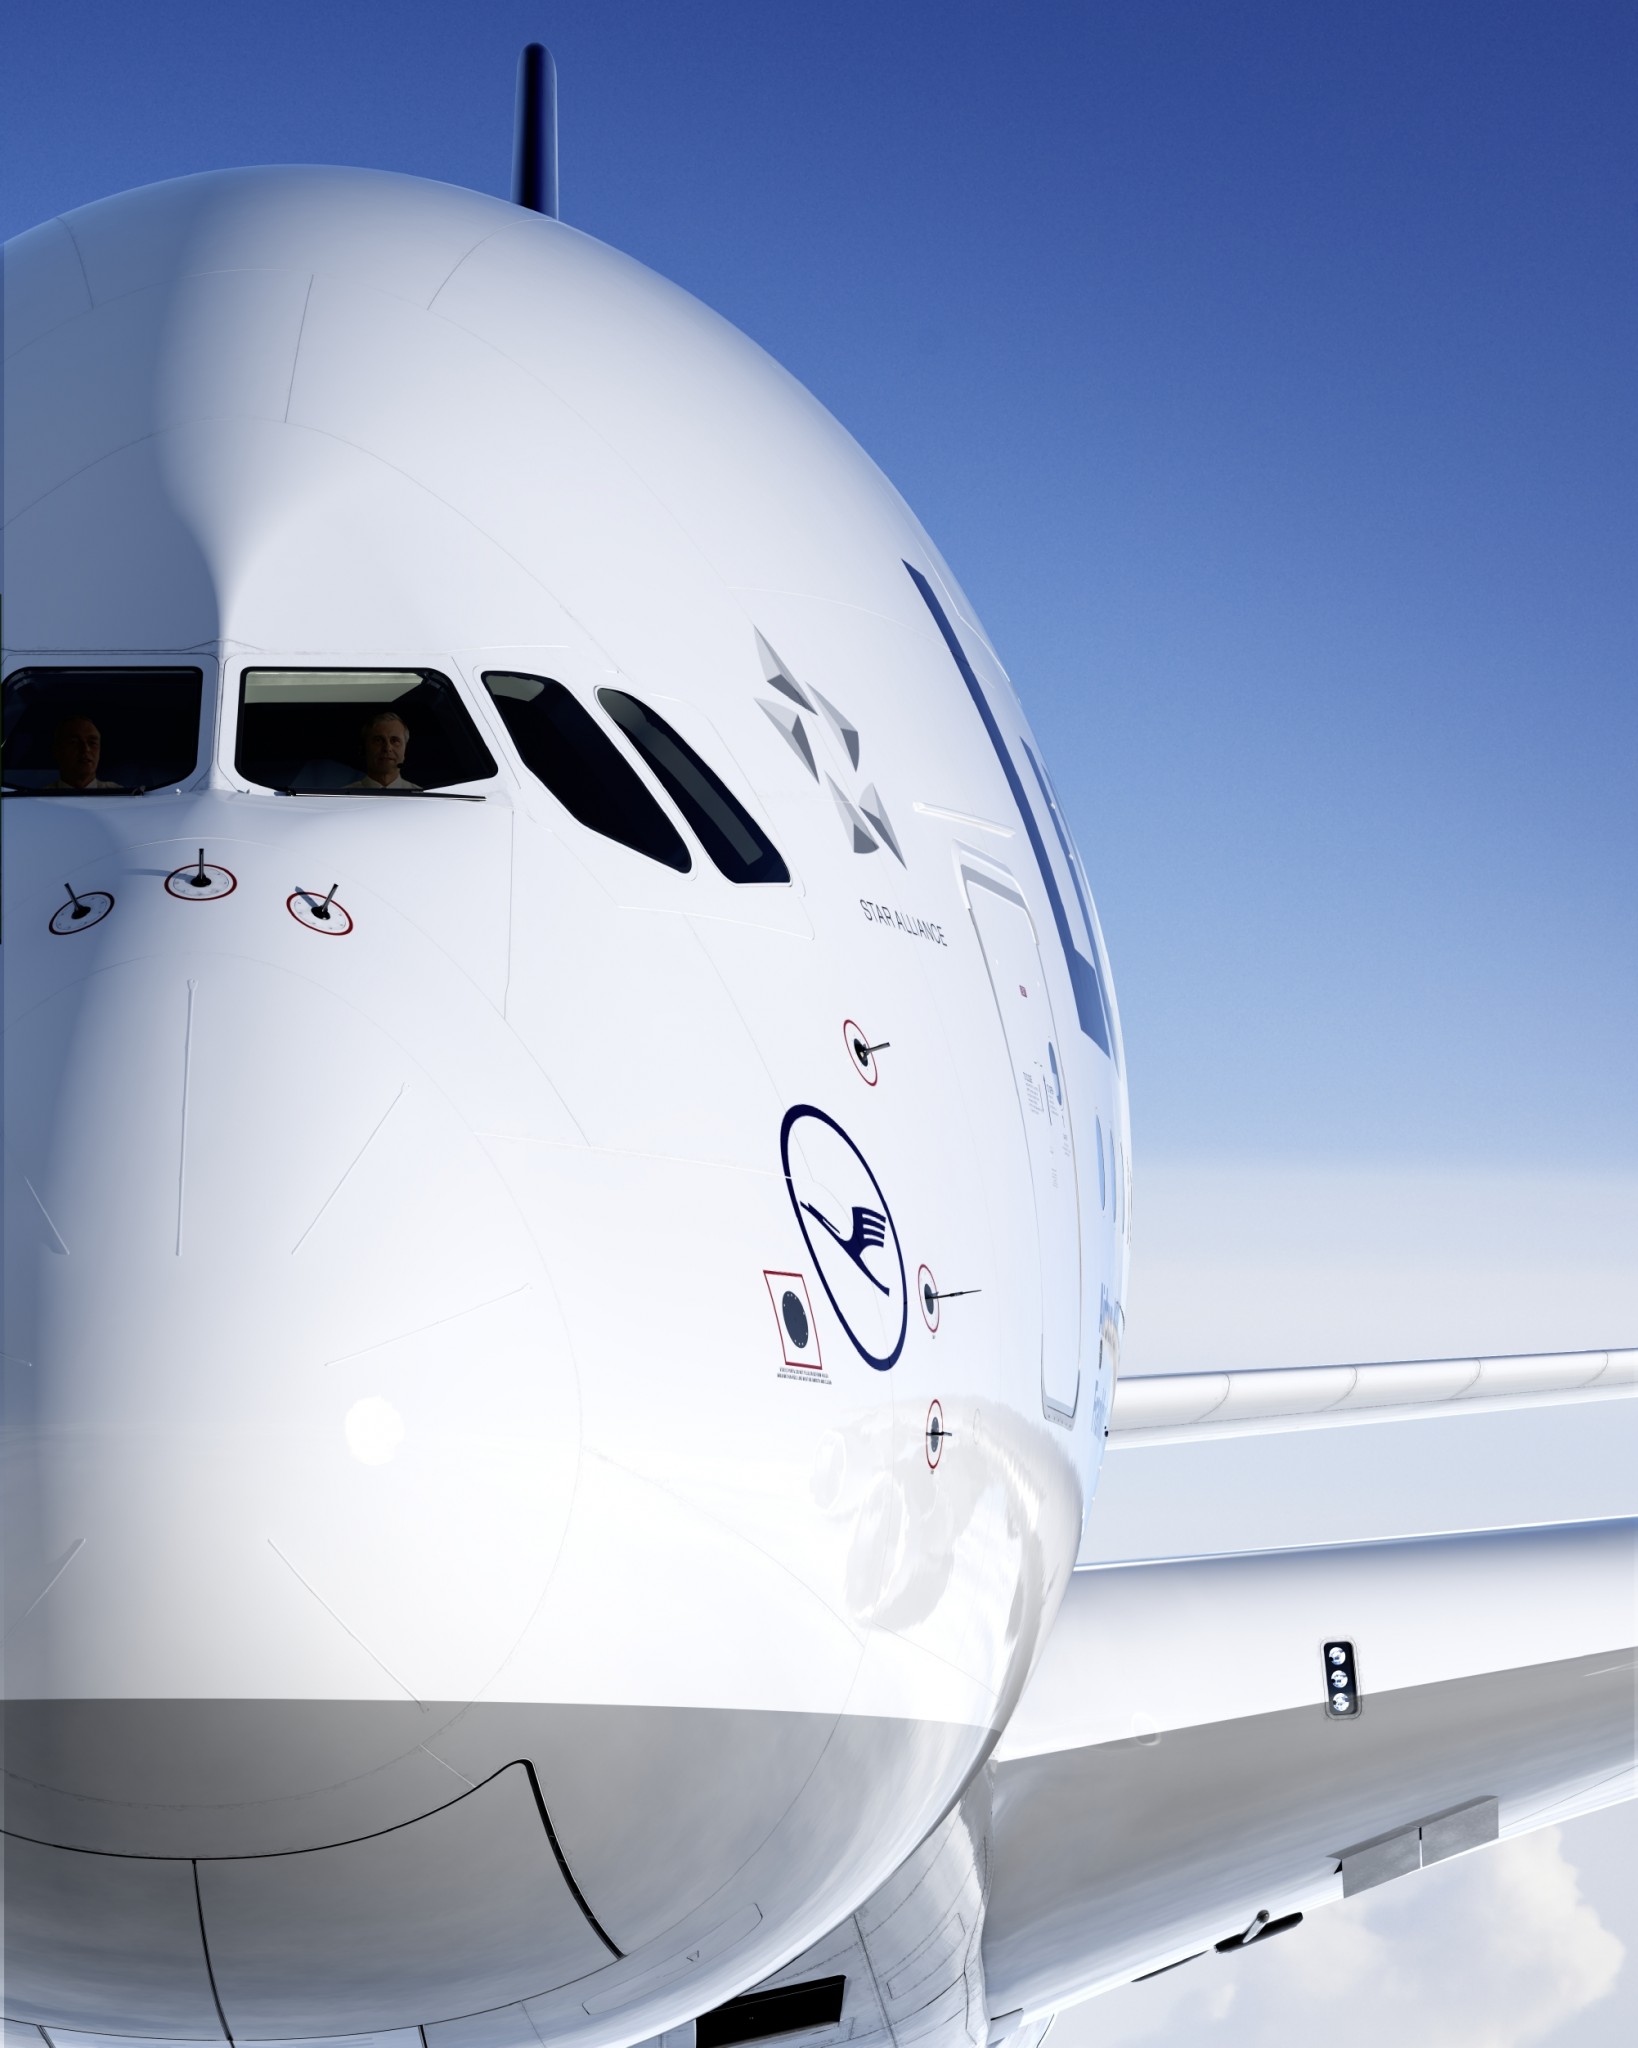 Lufthansa to station five A380 widebody jets in Munich